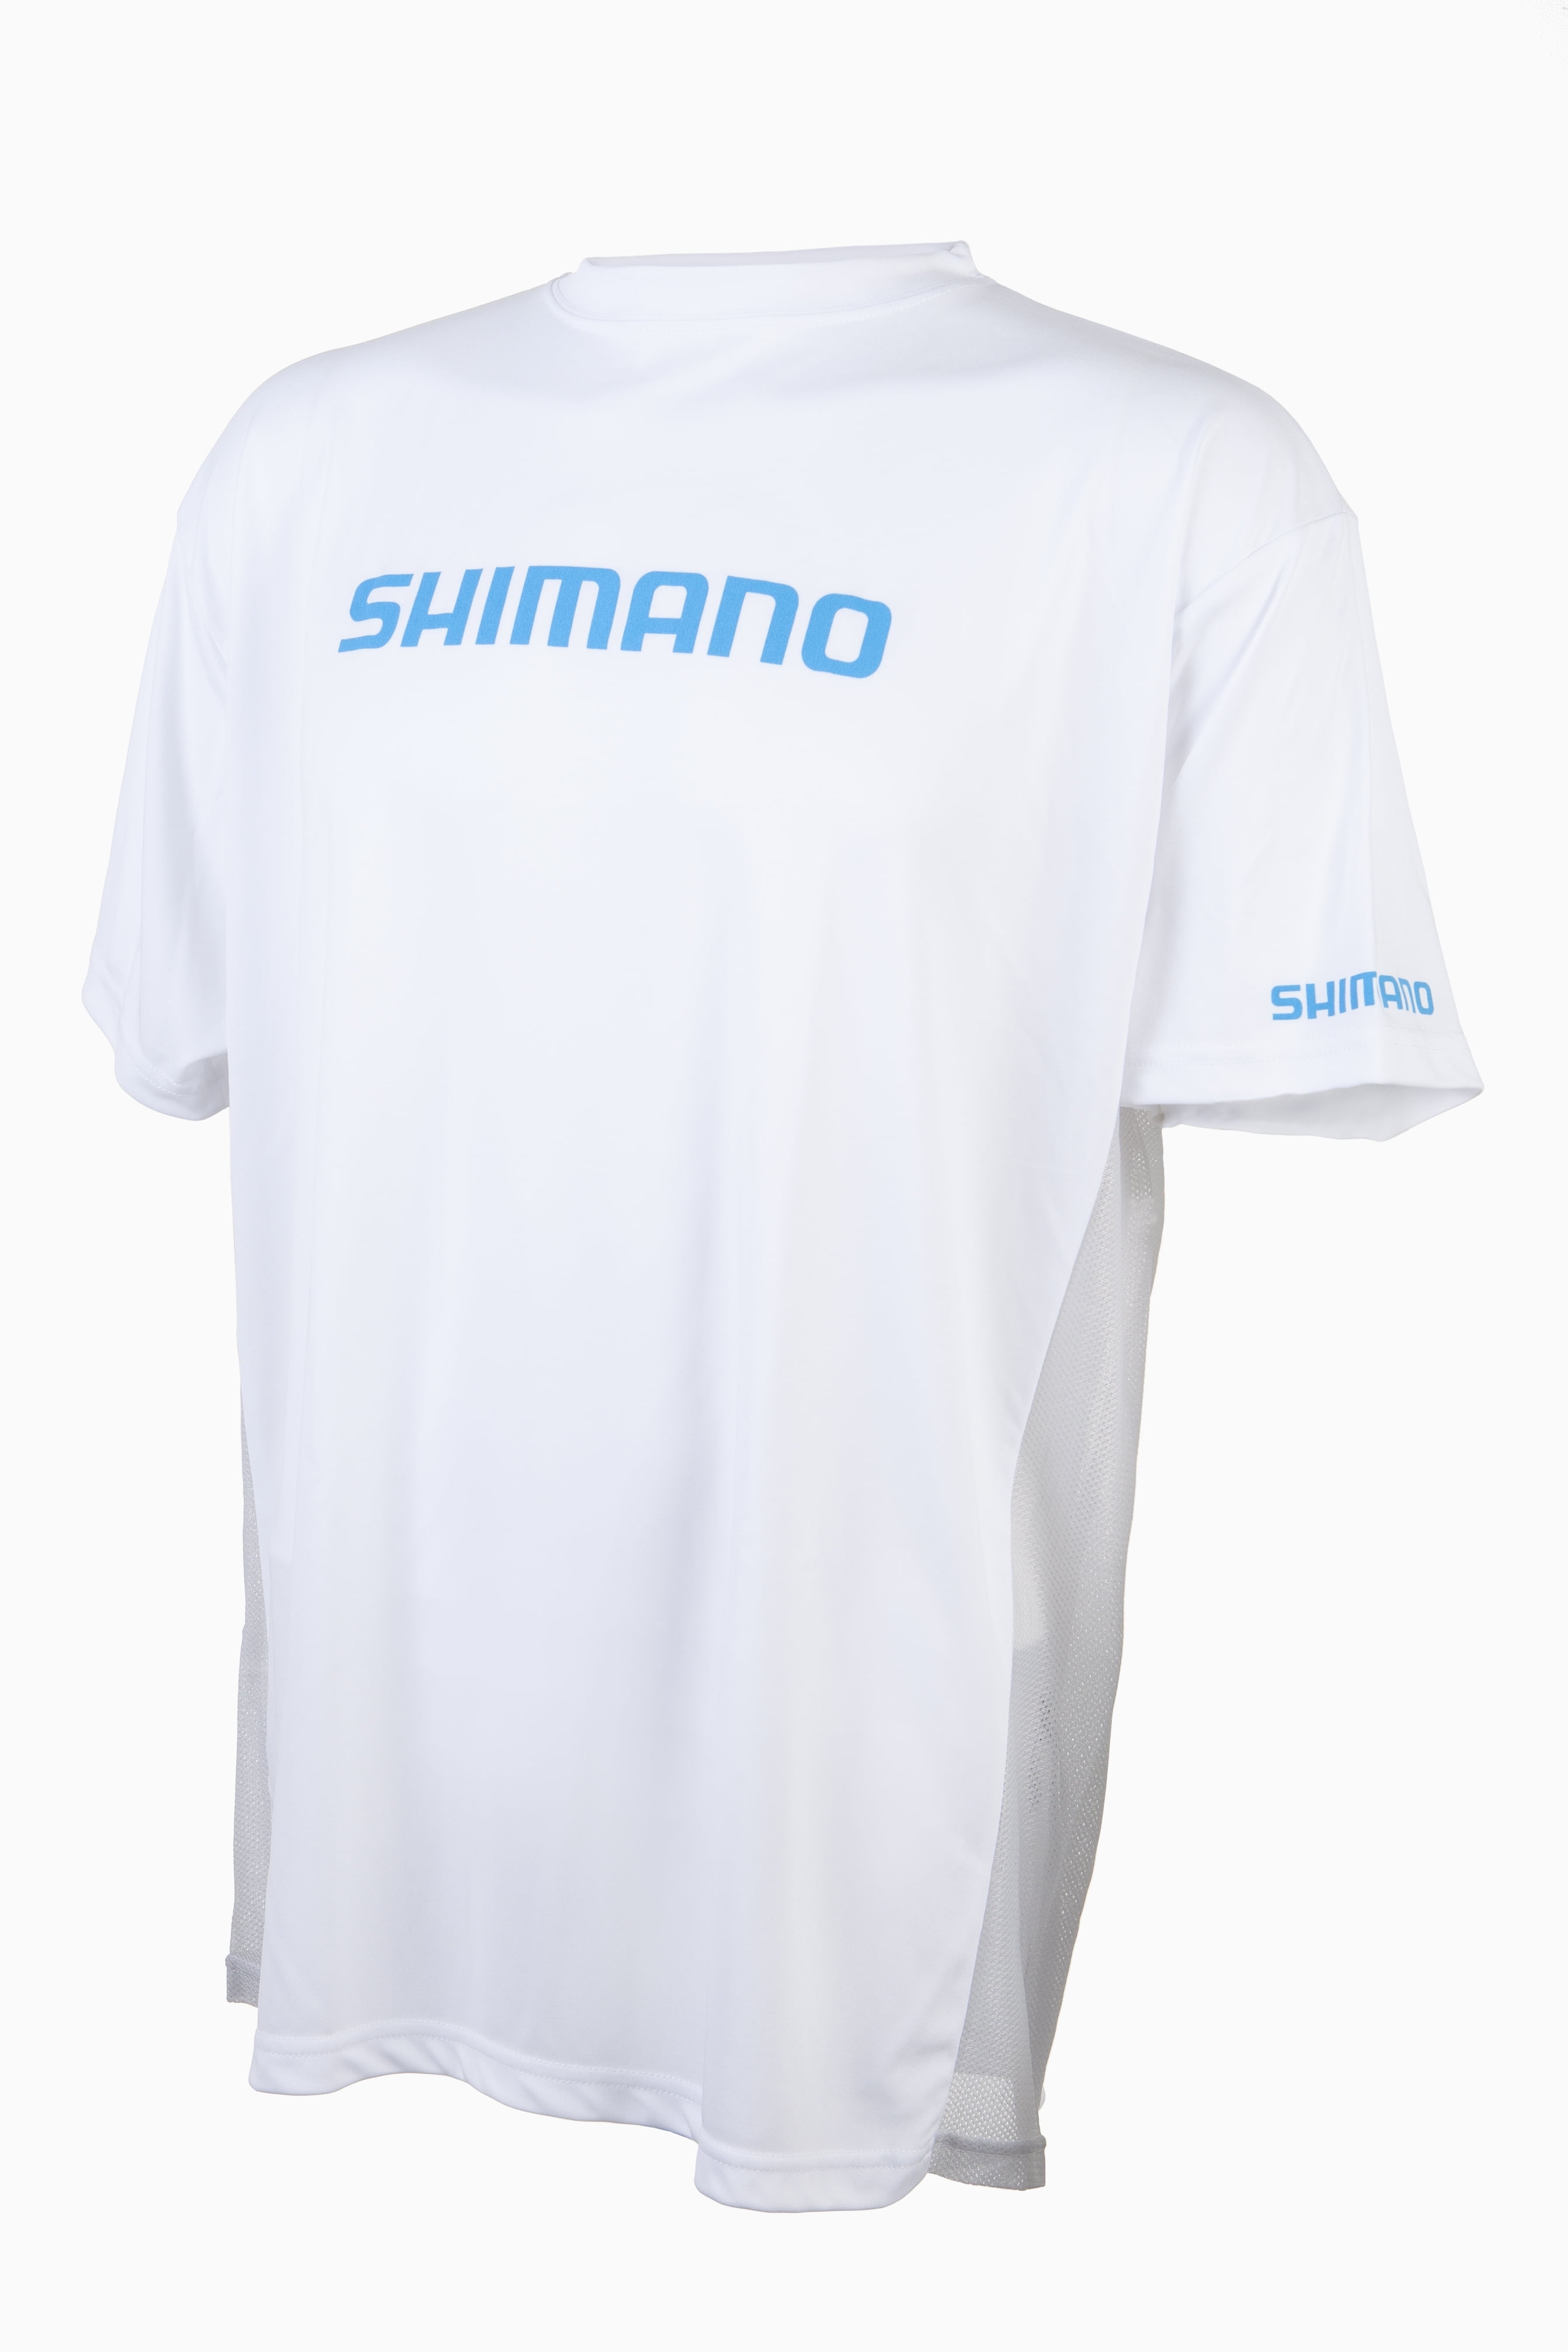 Shimano Fishing Shimano Short Sleeve Tech Tee - White, MD [ATEEVAPSSMWH] 